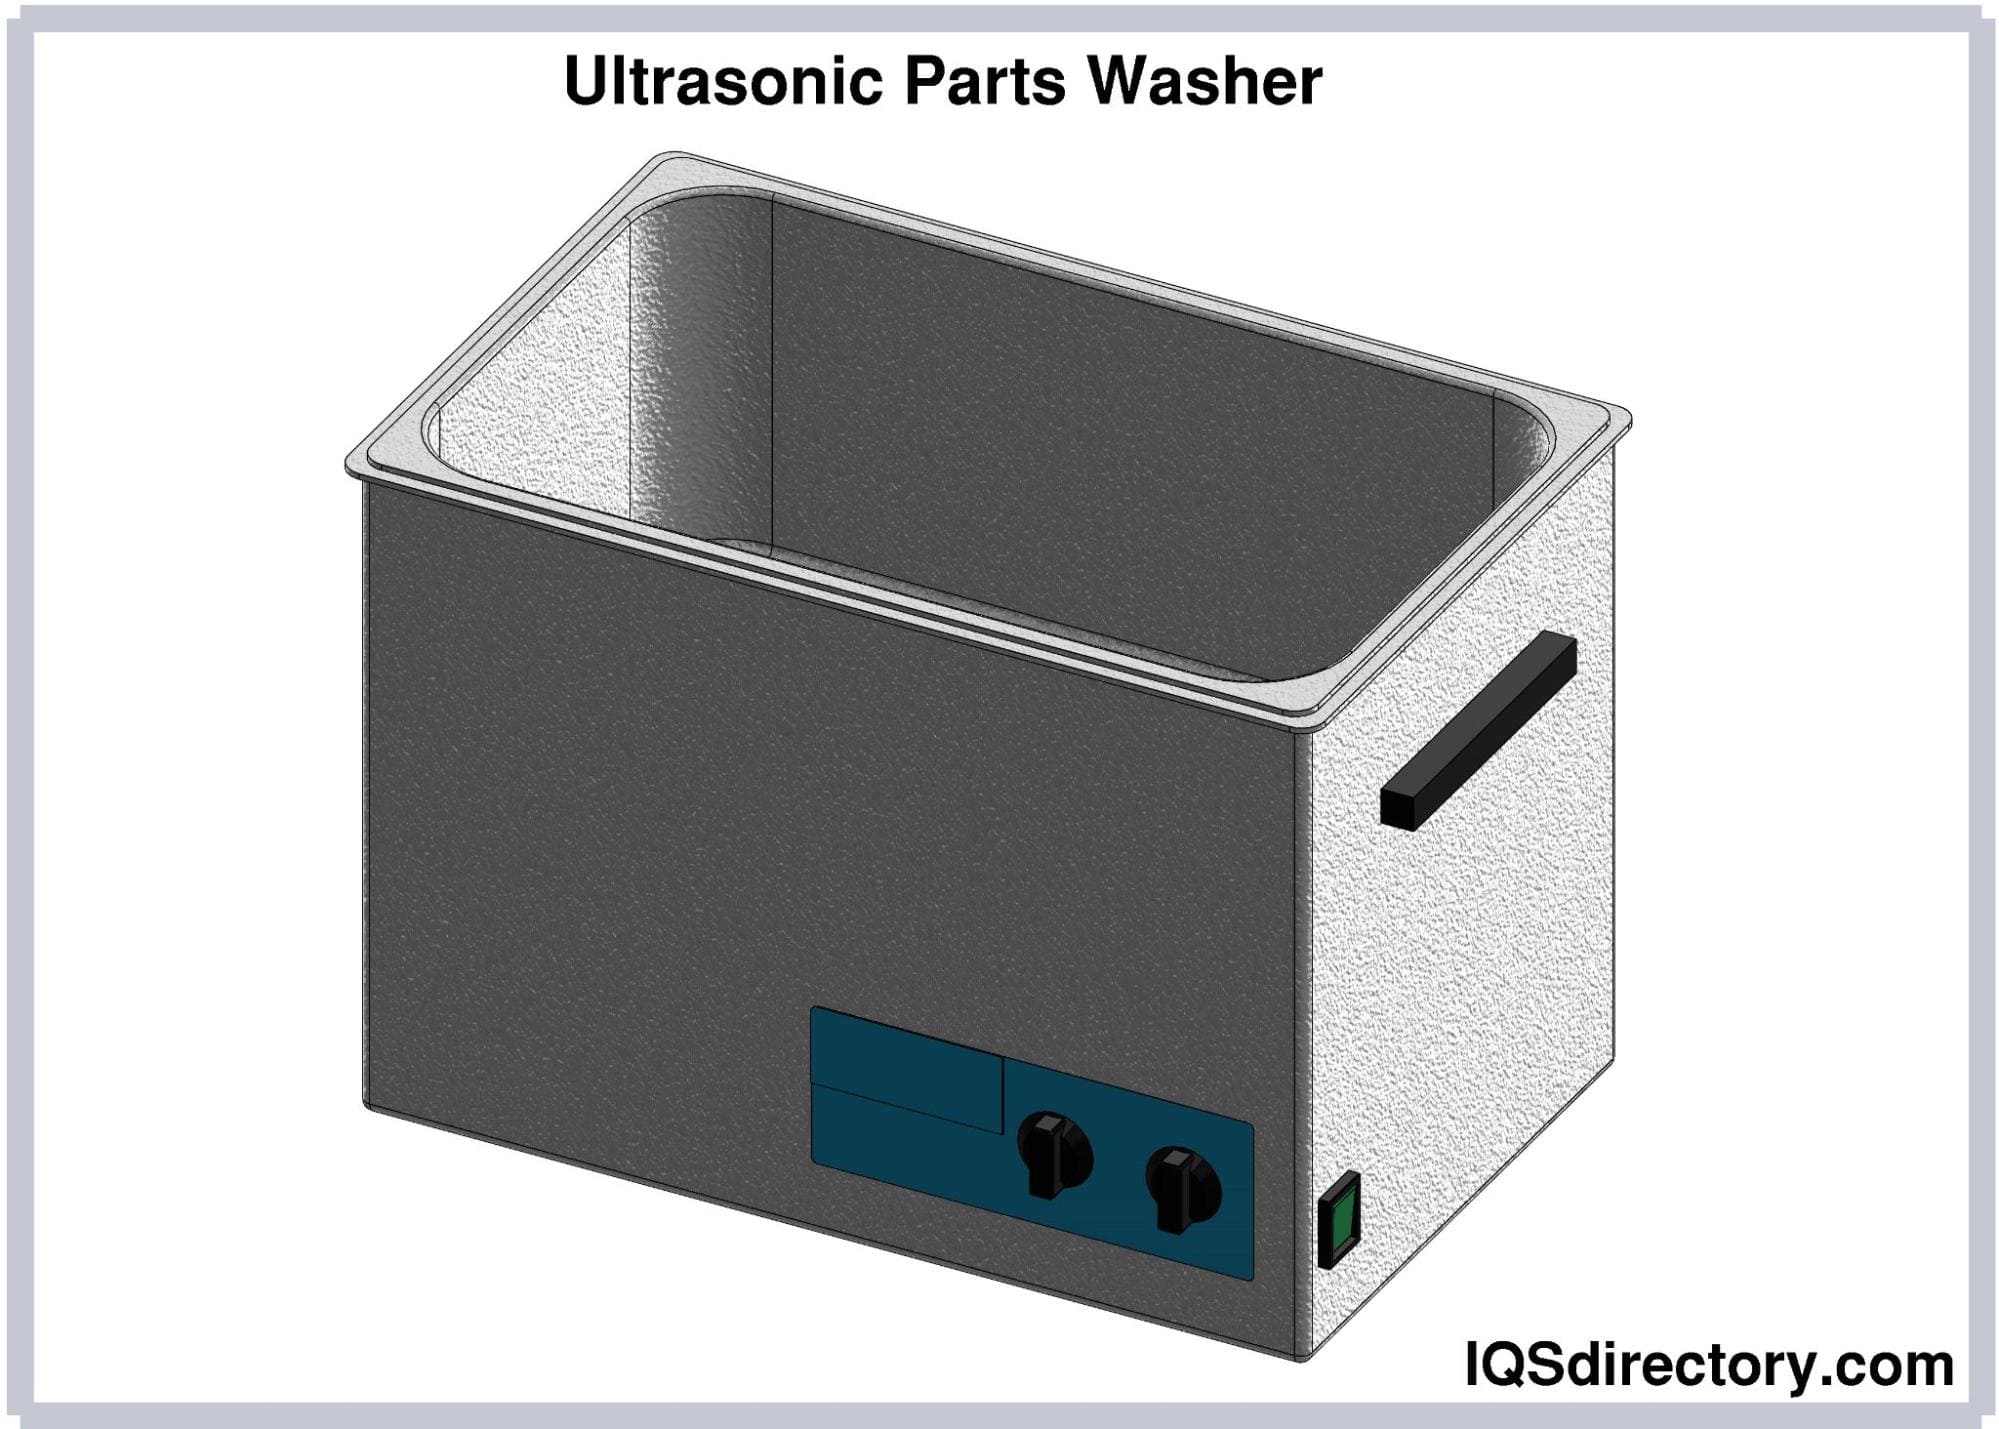 UltraSonic Part Washer